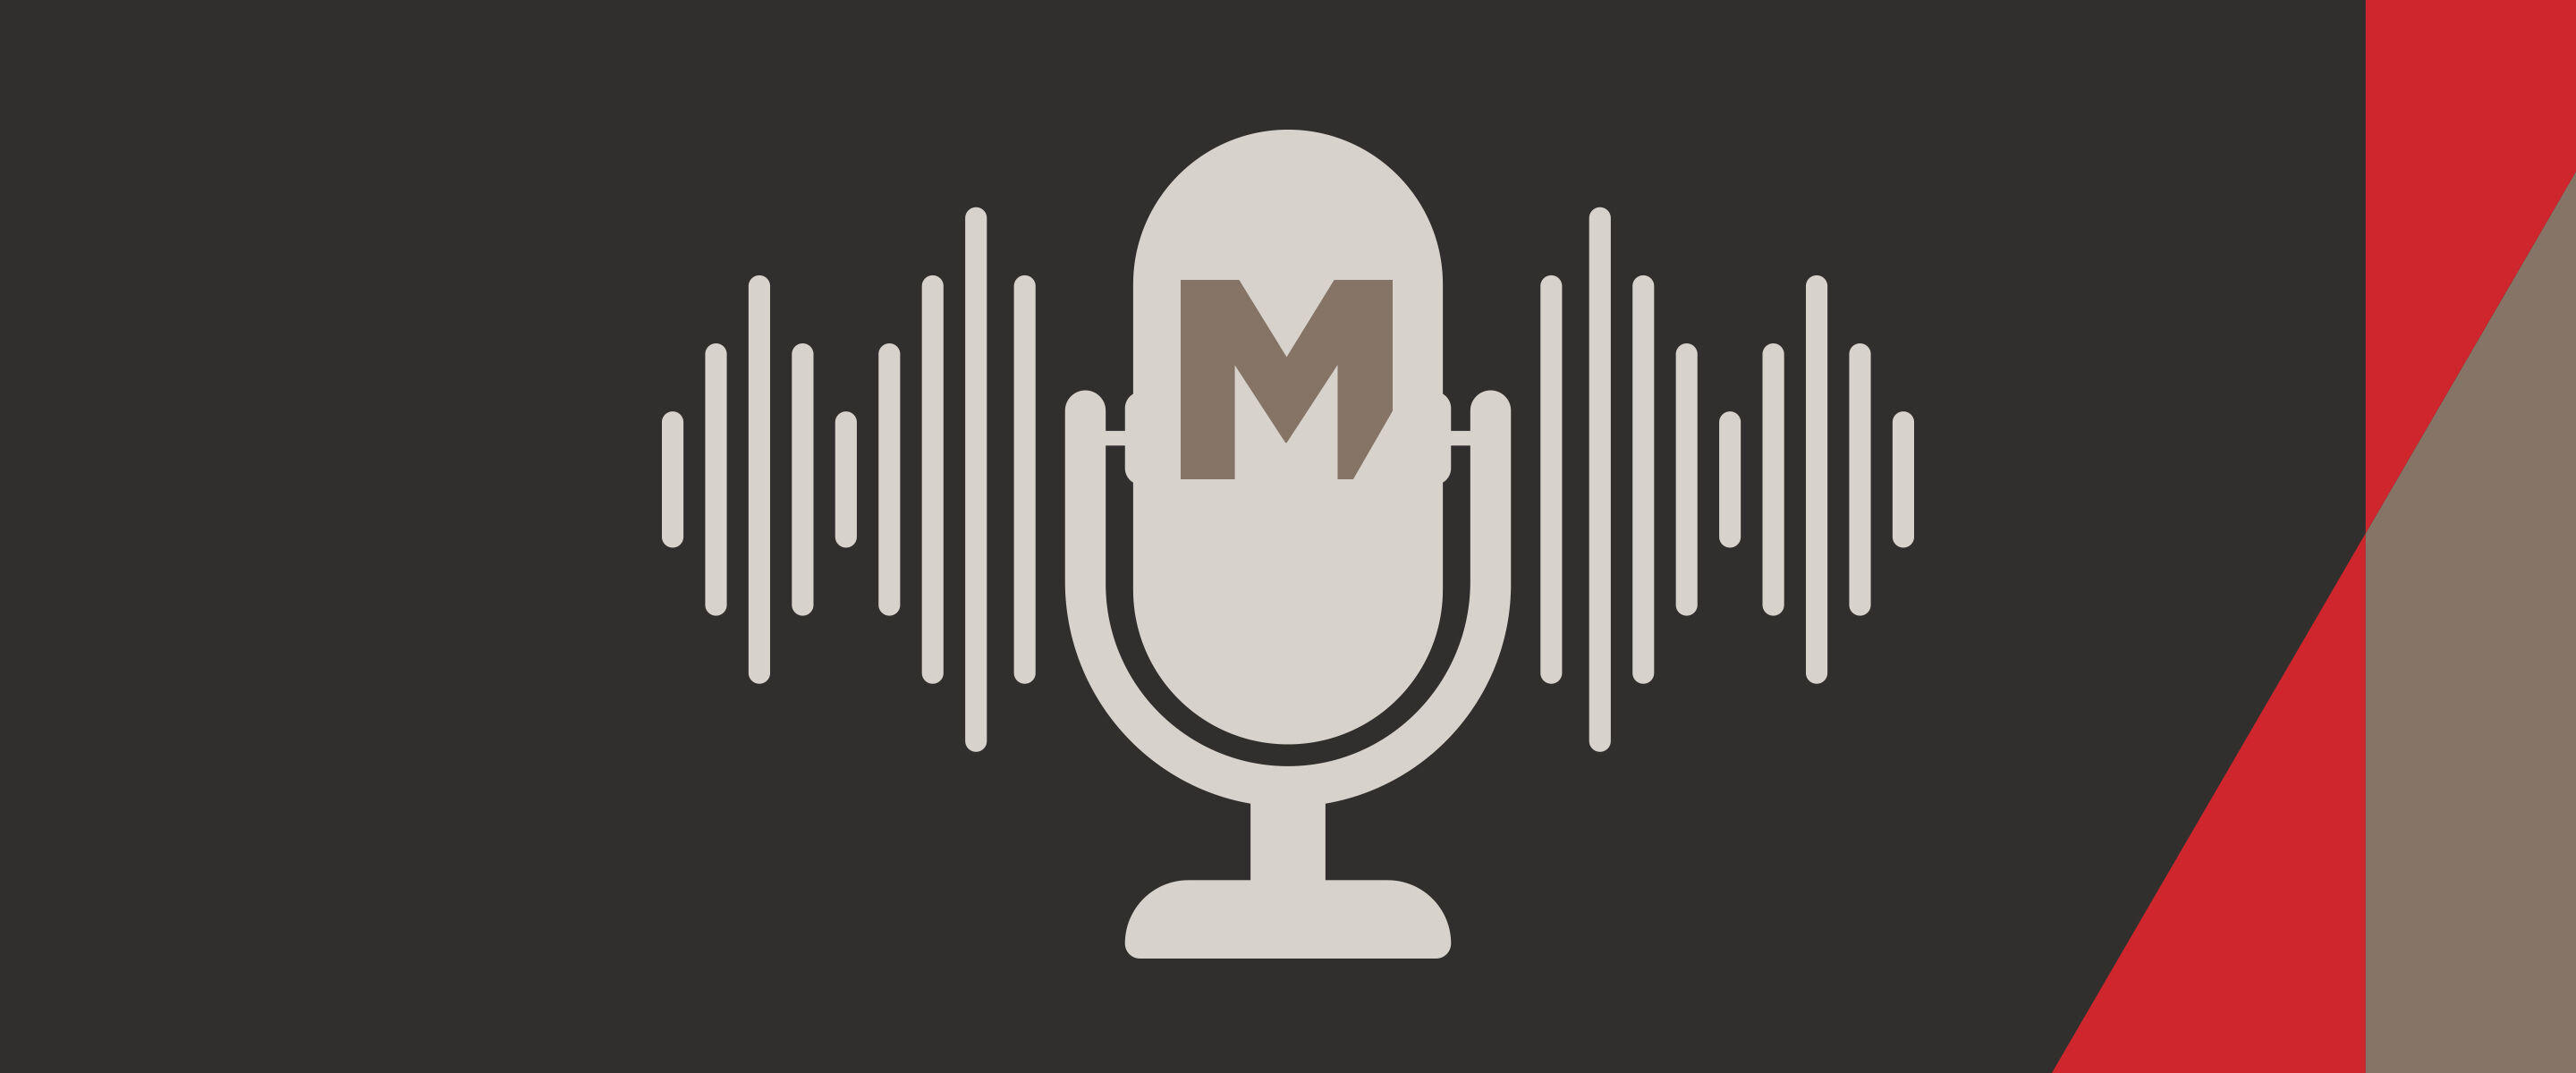 Muntstad-Podcast-Business-Center-5